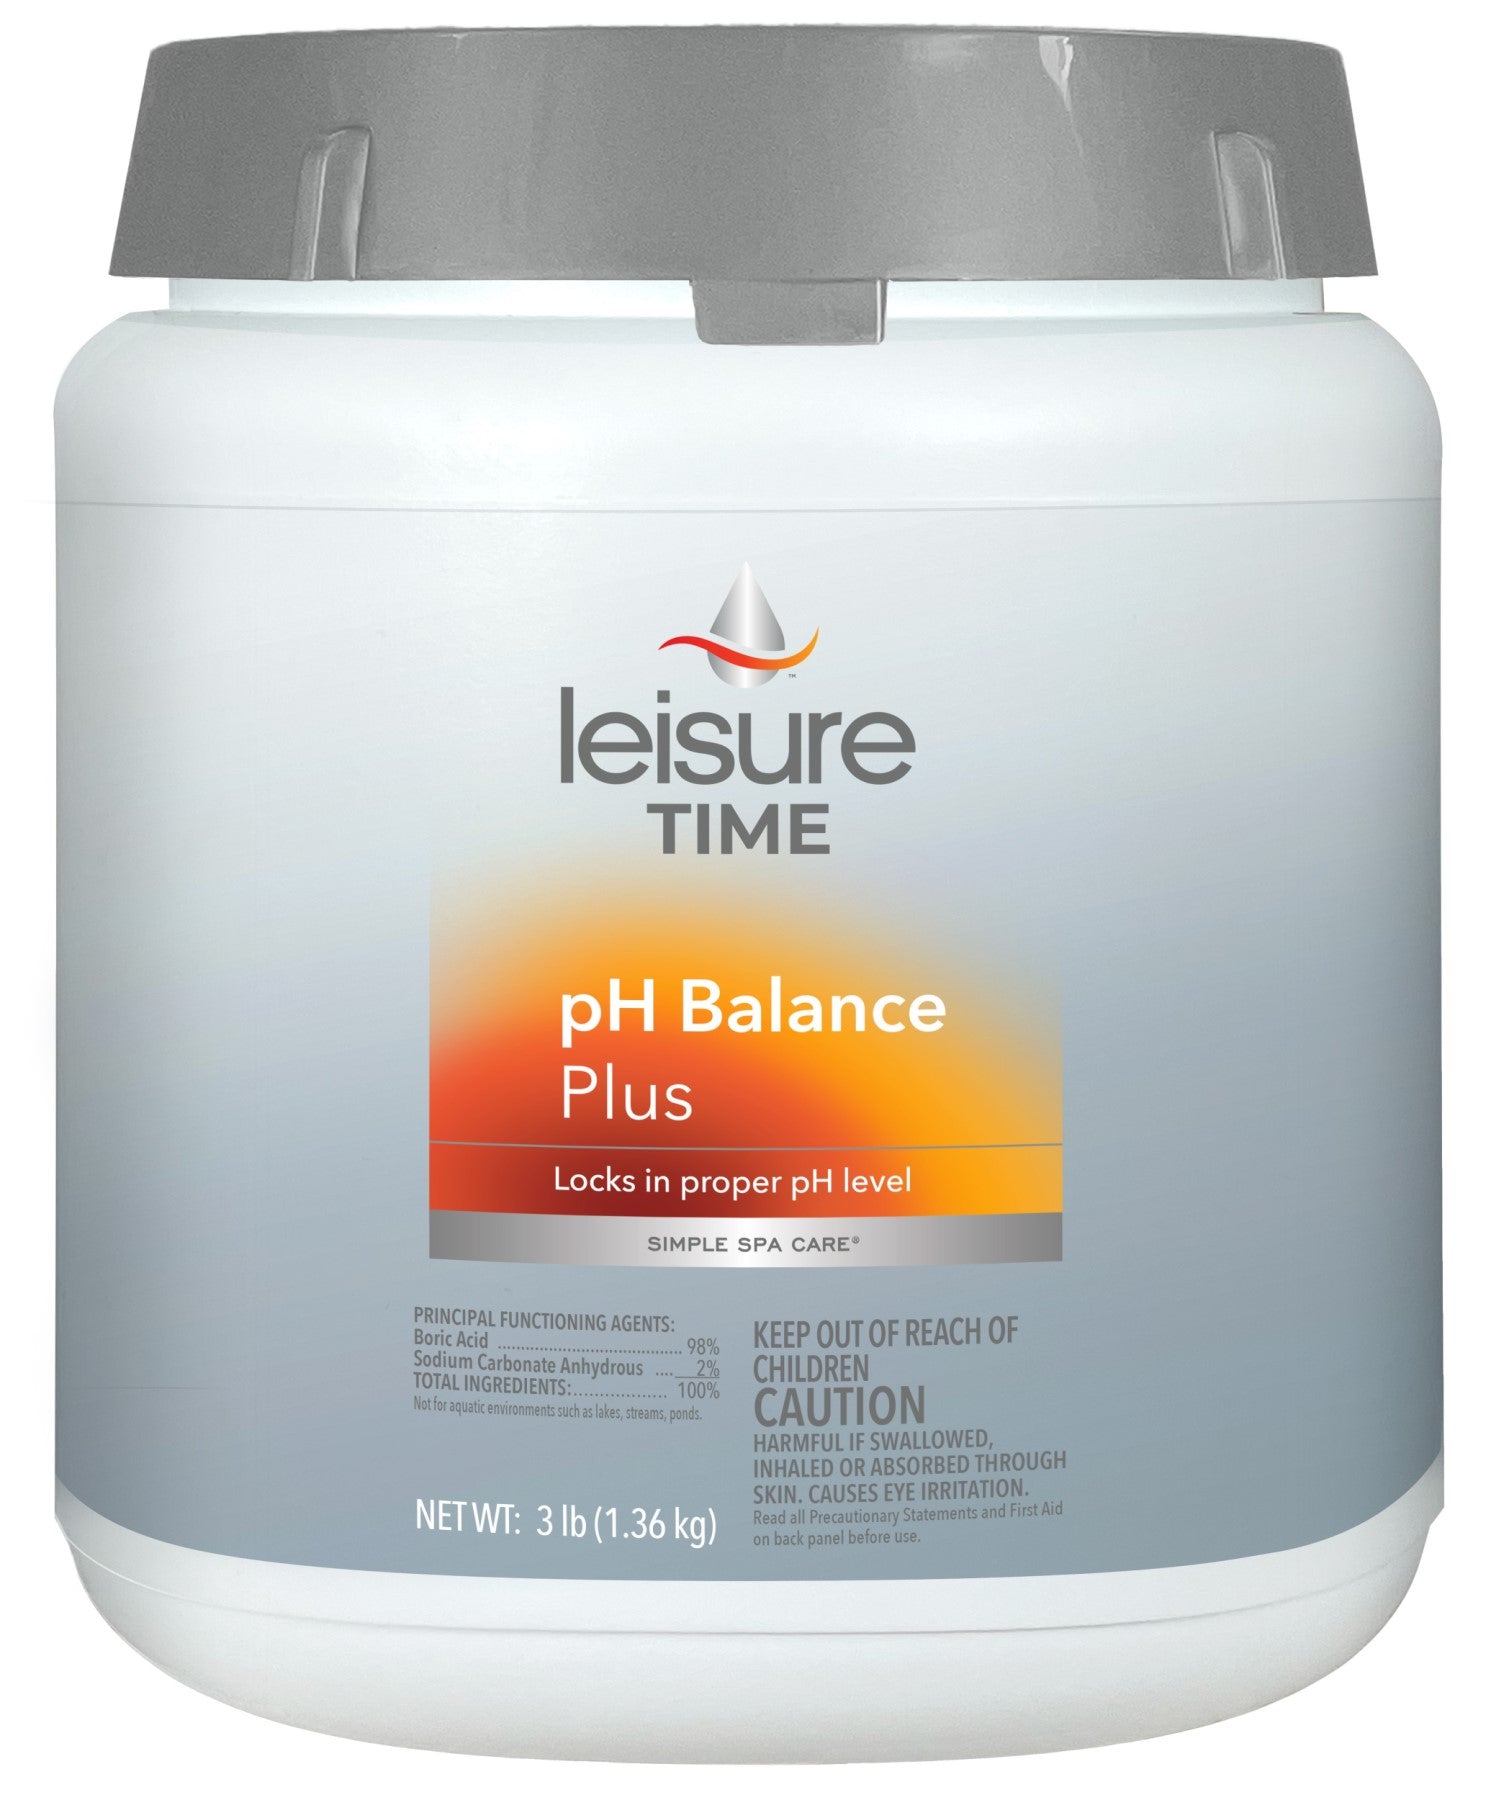 Leisure Time pH Balance Plus 3 lb